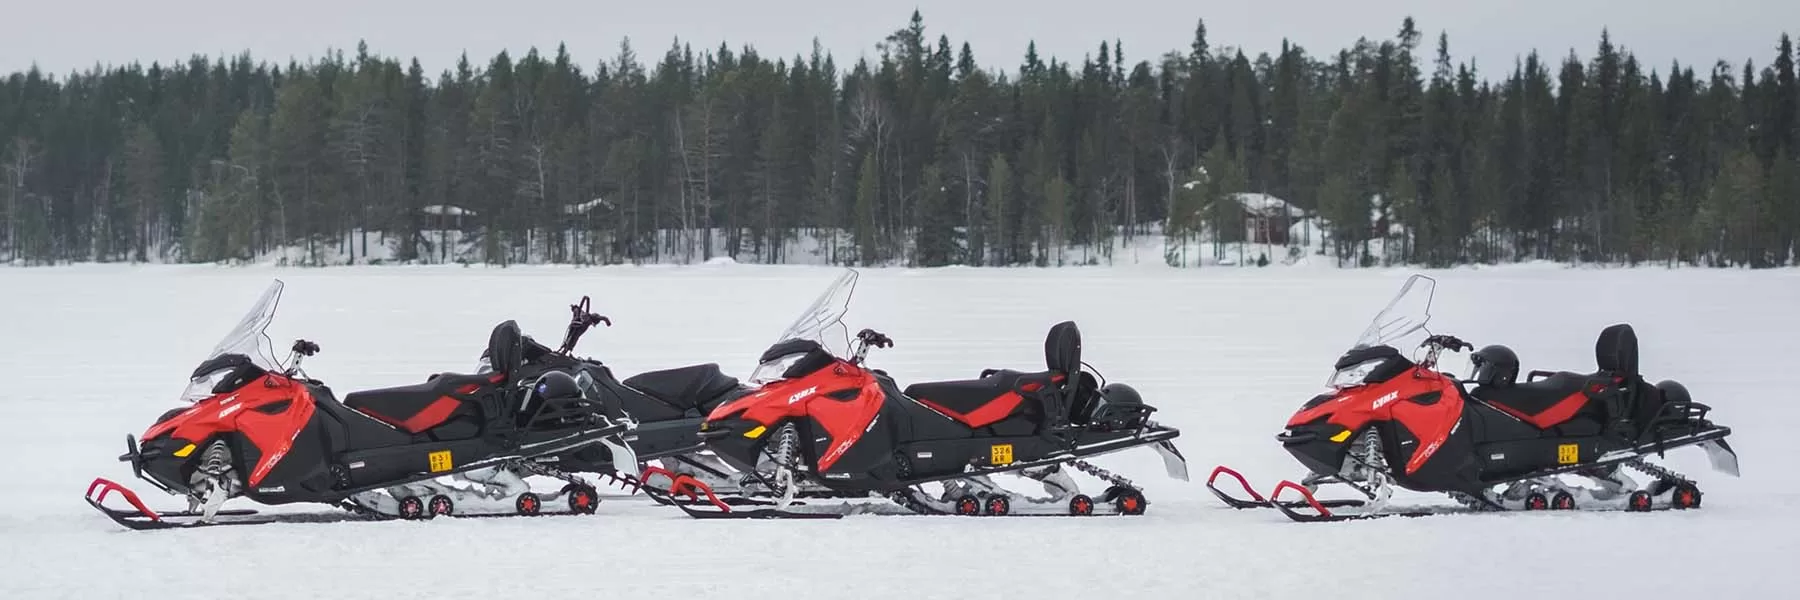 Snow activities like snowmobile, dog sledding, reindeer sledding etc